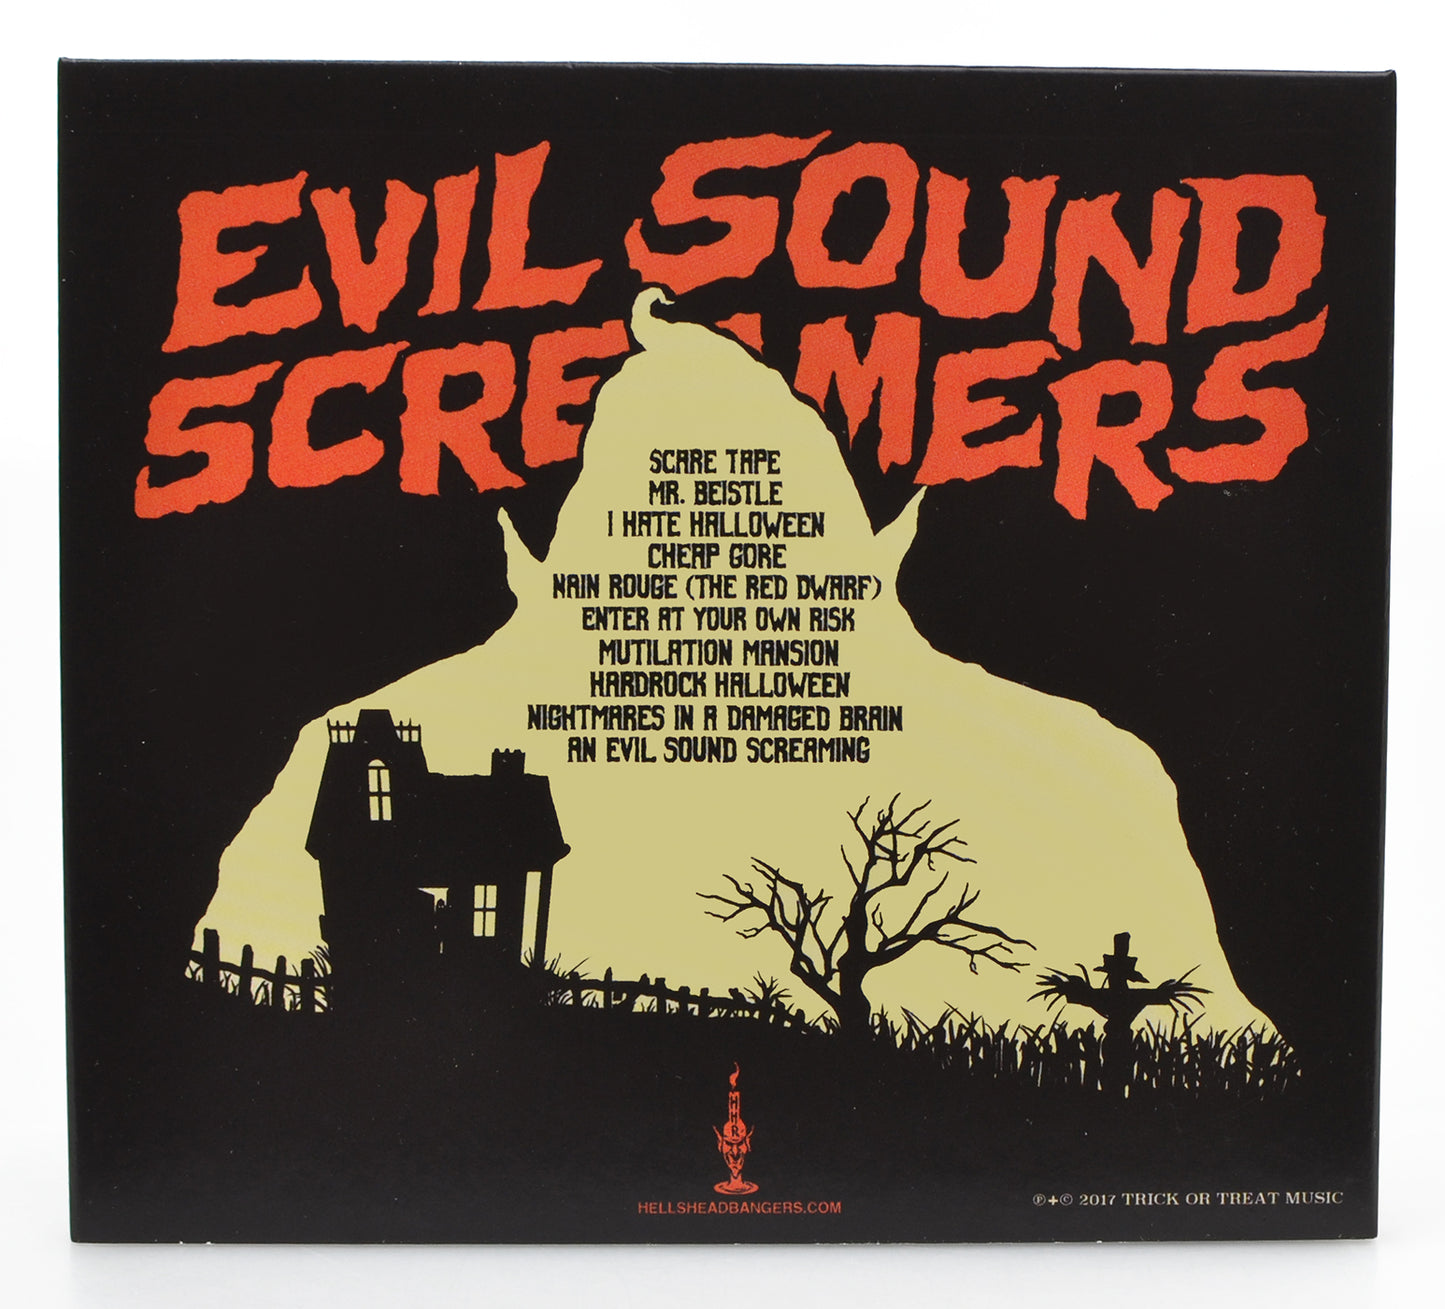 ACID WITCH - Evil Sound Screamers (DIGIPAK CD)